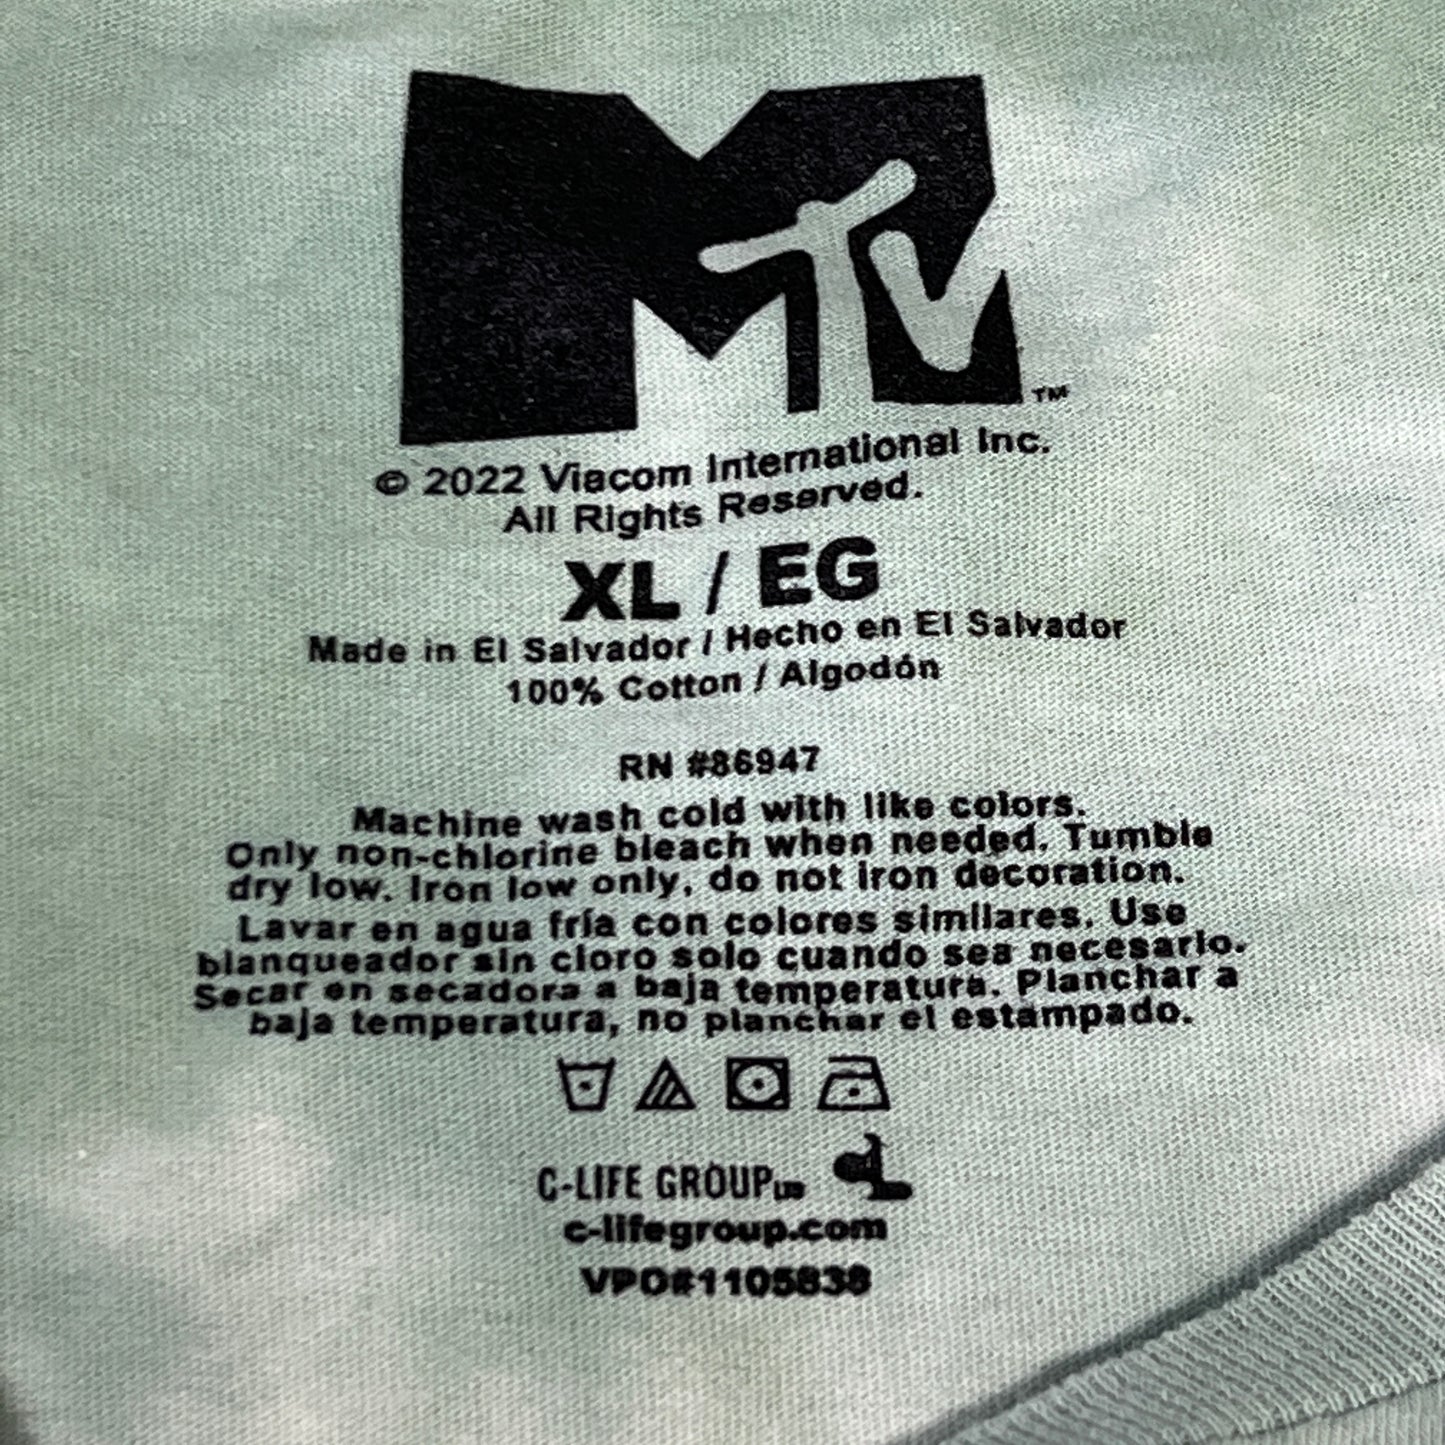 MTV Mint and White Tie-Dye Short Sleeve T-Shirt Women's Sz XL 86947(New)